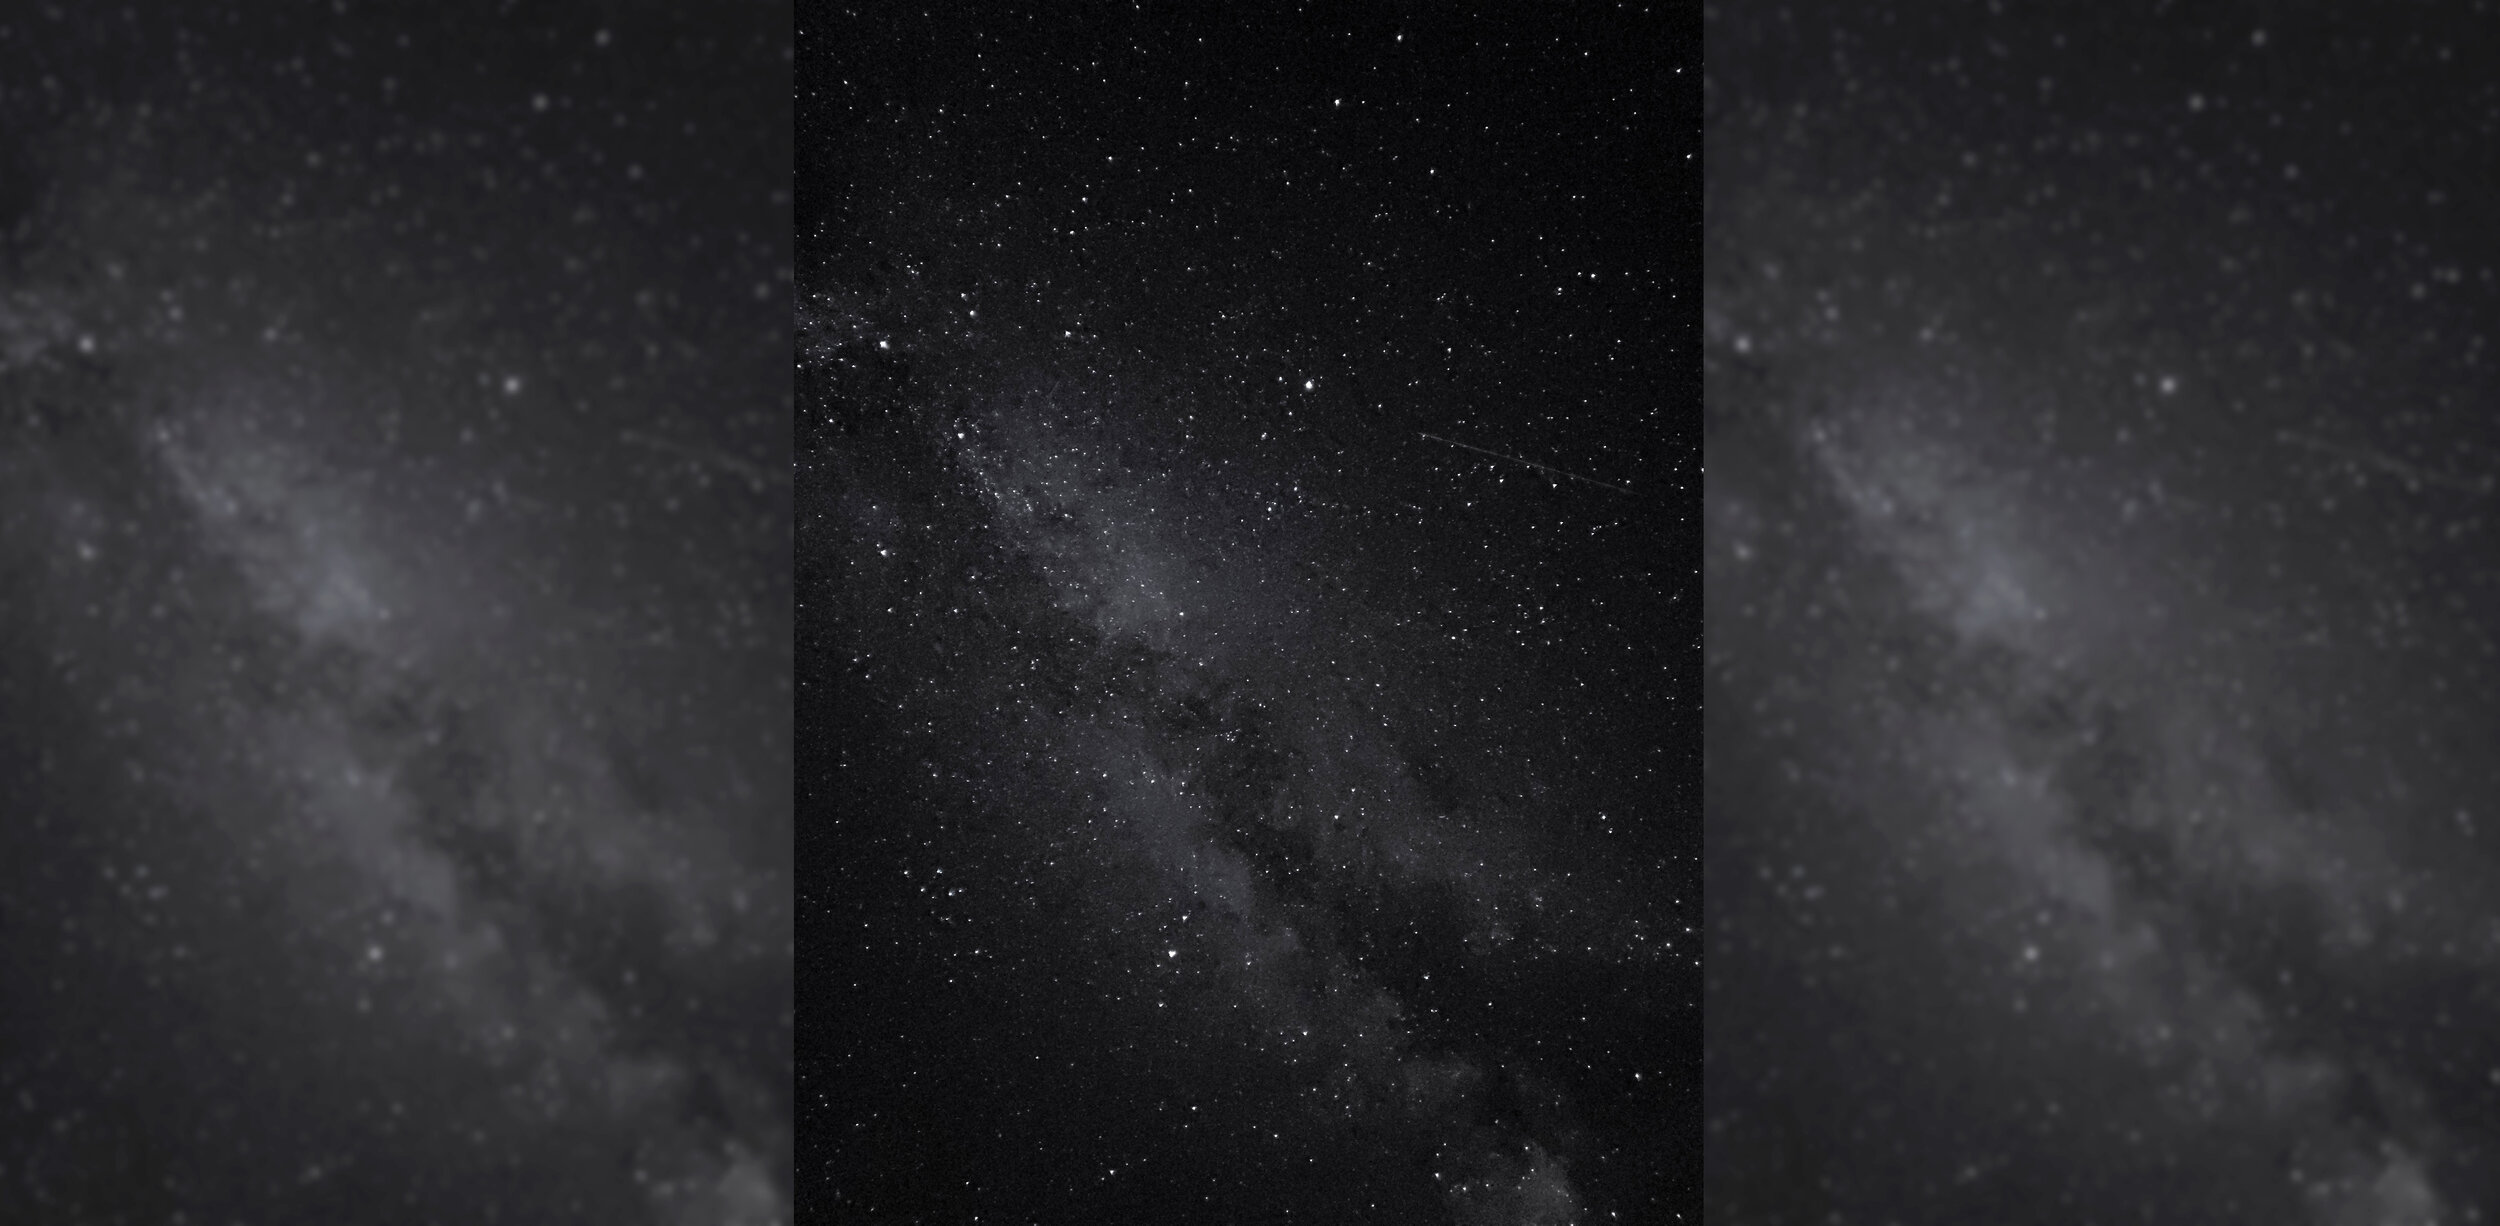 Montana Night Sky Galaxy Milky Way.jpg